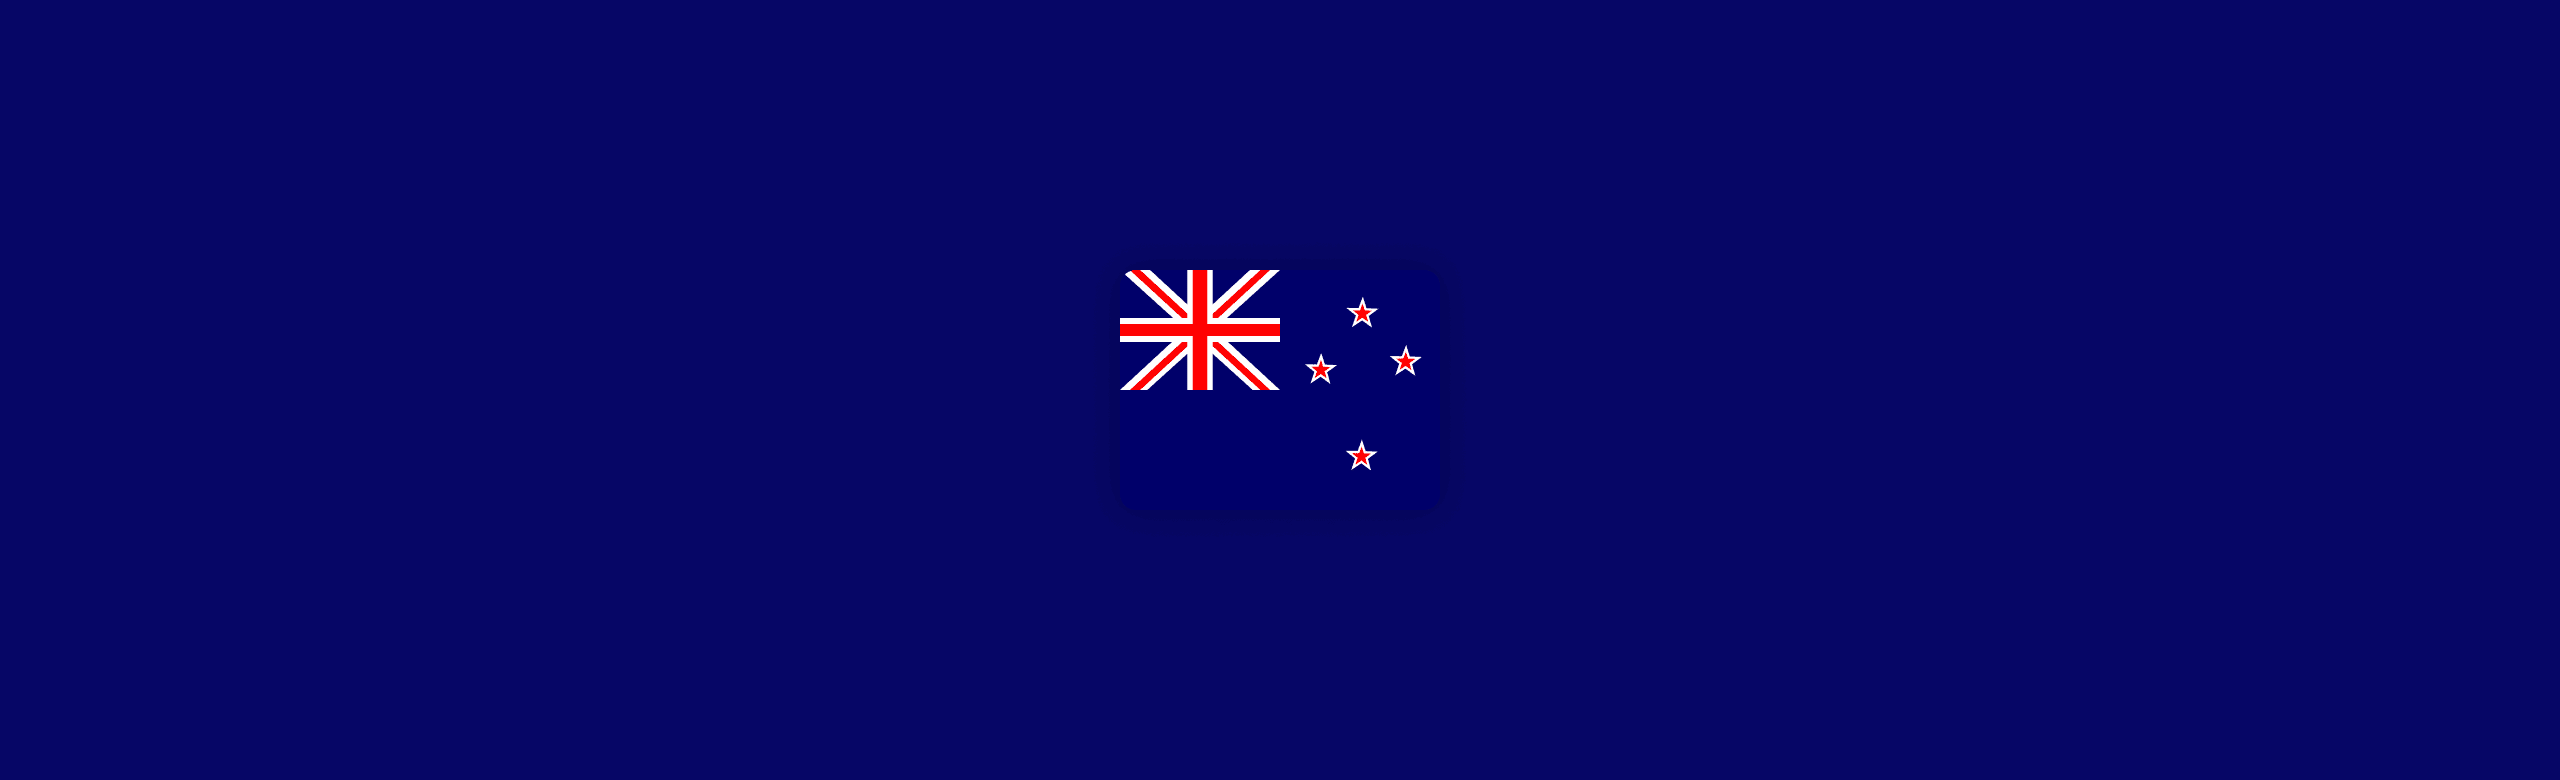 New Zeland Flag